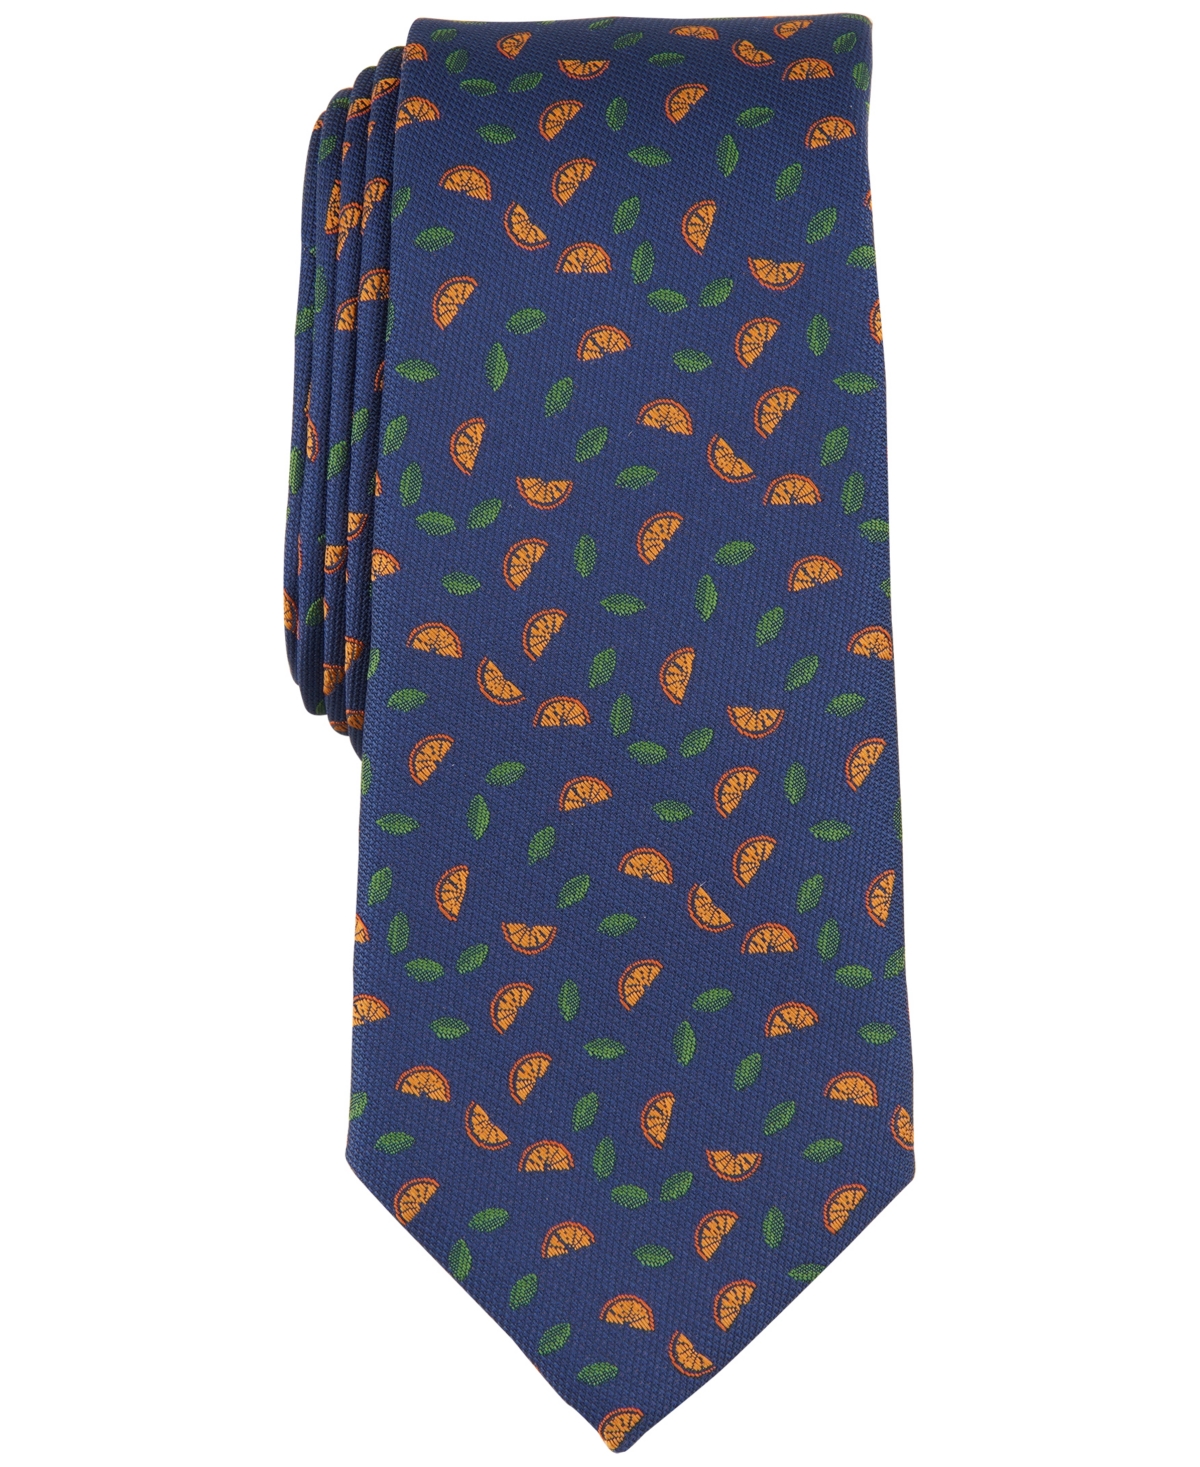 Men's Barfield Orange Slice Tie, Created for Macy's - Blue